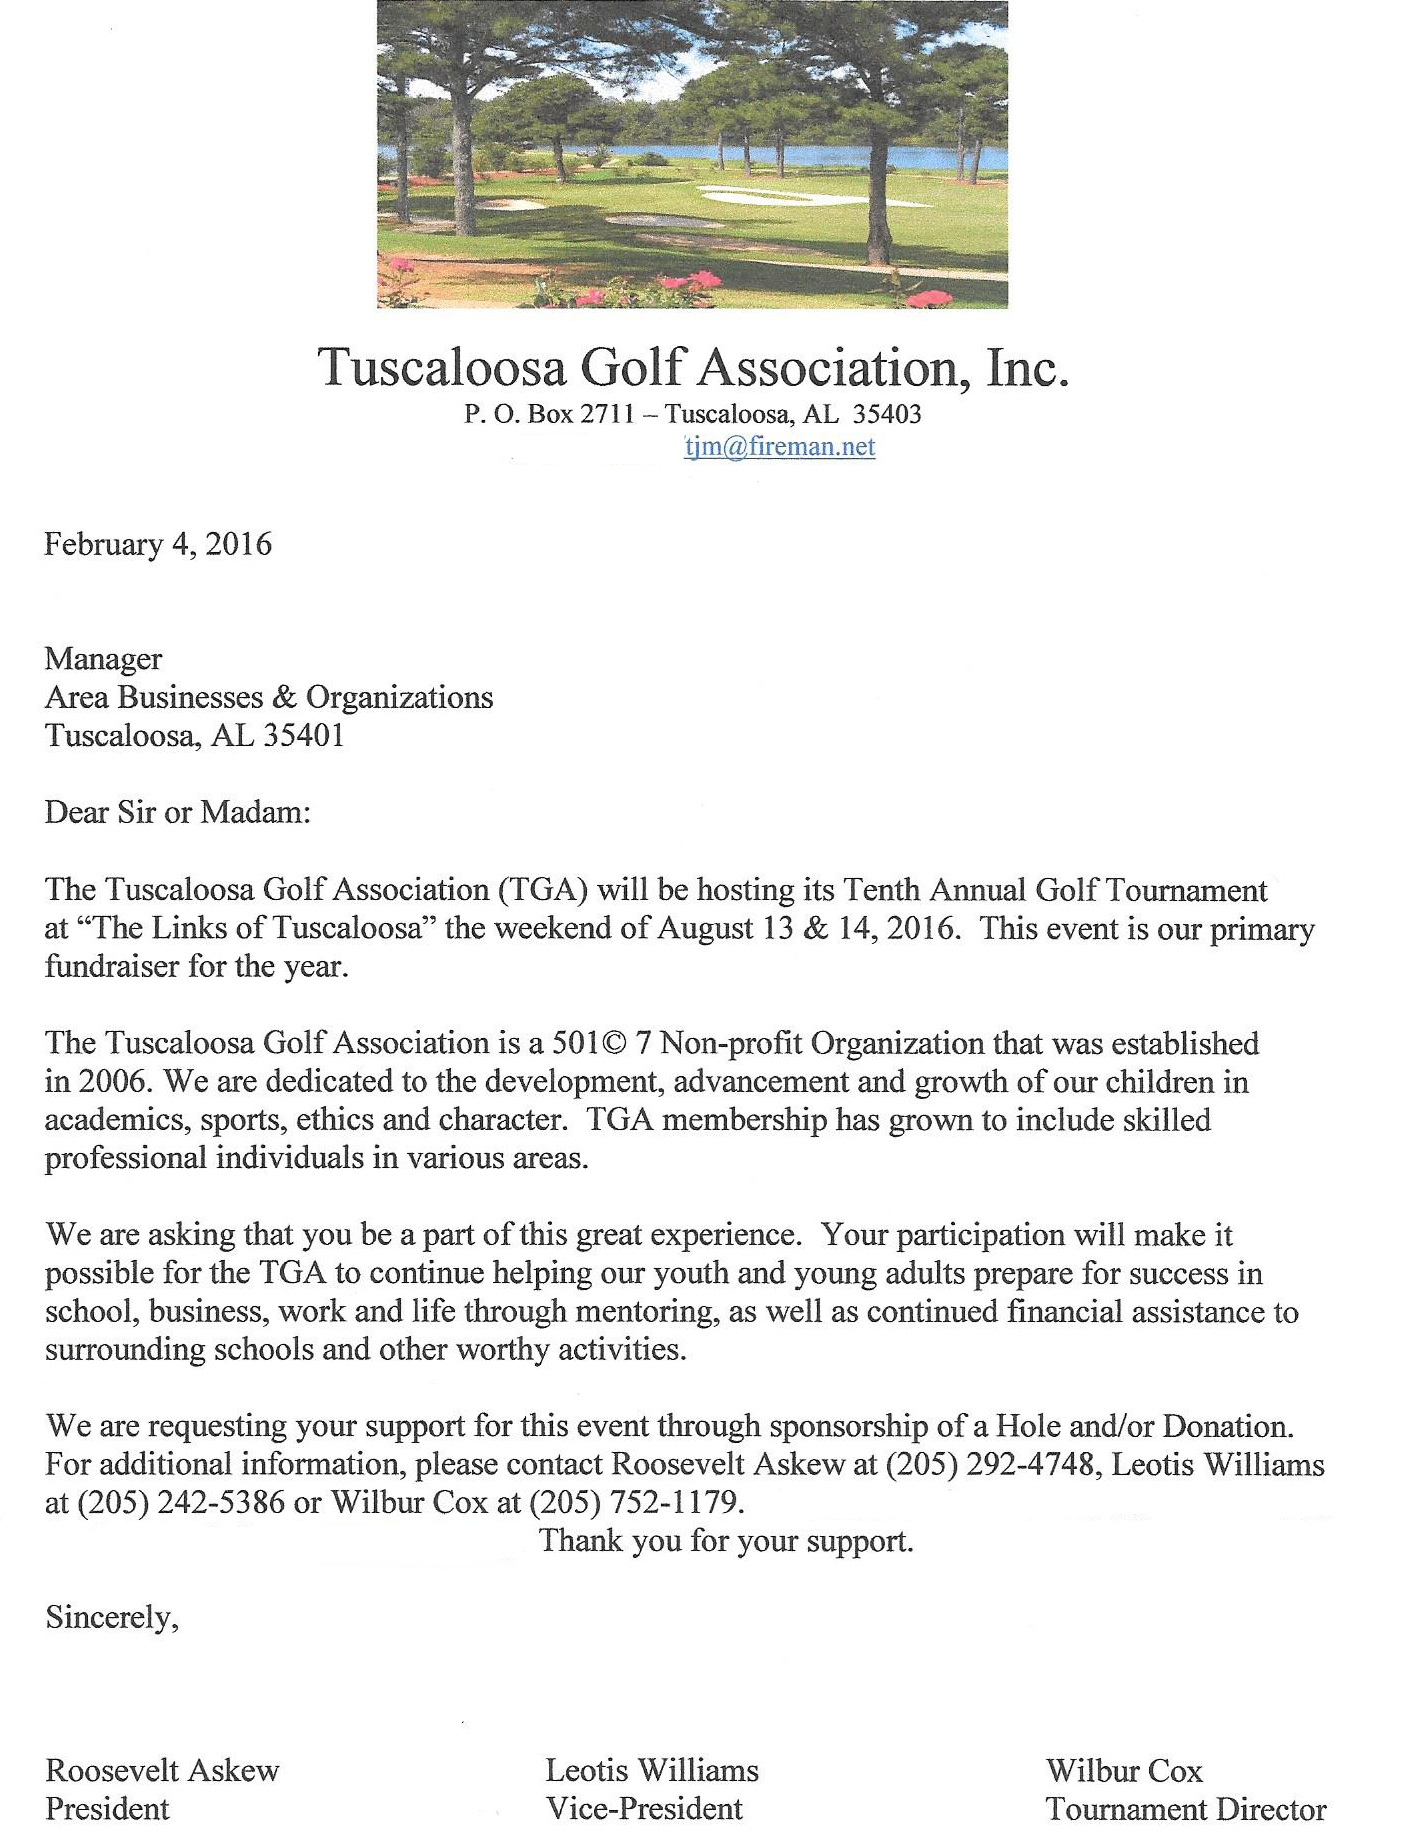 Welcome to Tuscaloosa Golf Association